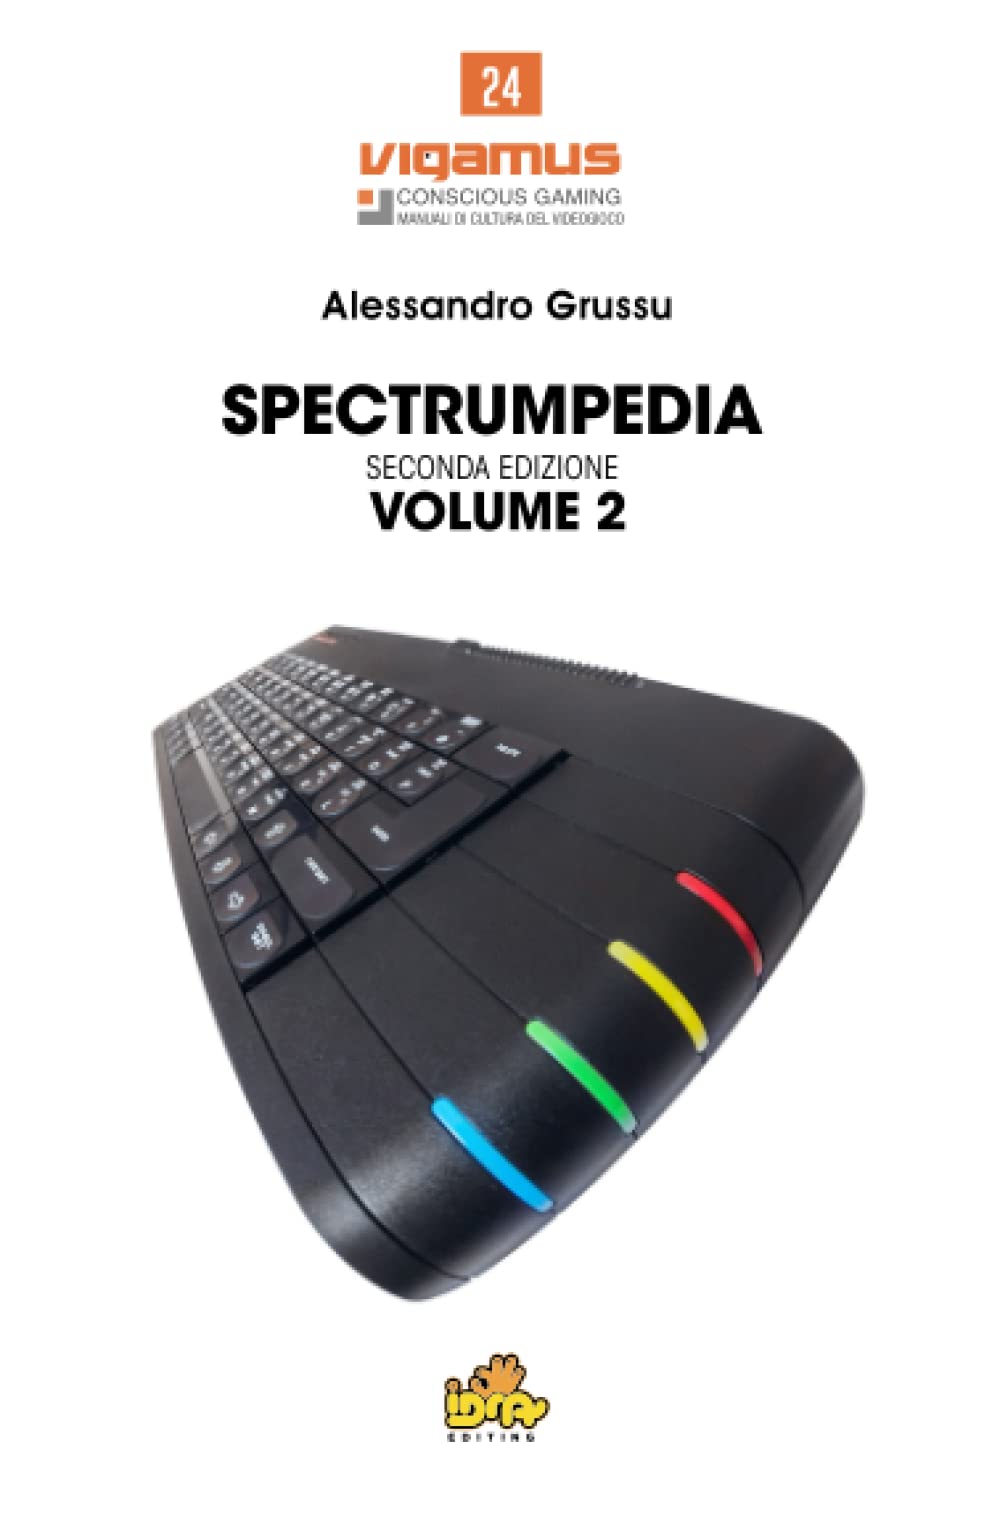 Spectrumpedia - Volume 2 image, screenshot or loading screen